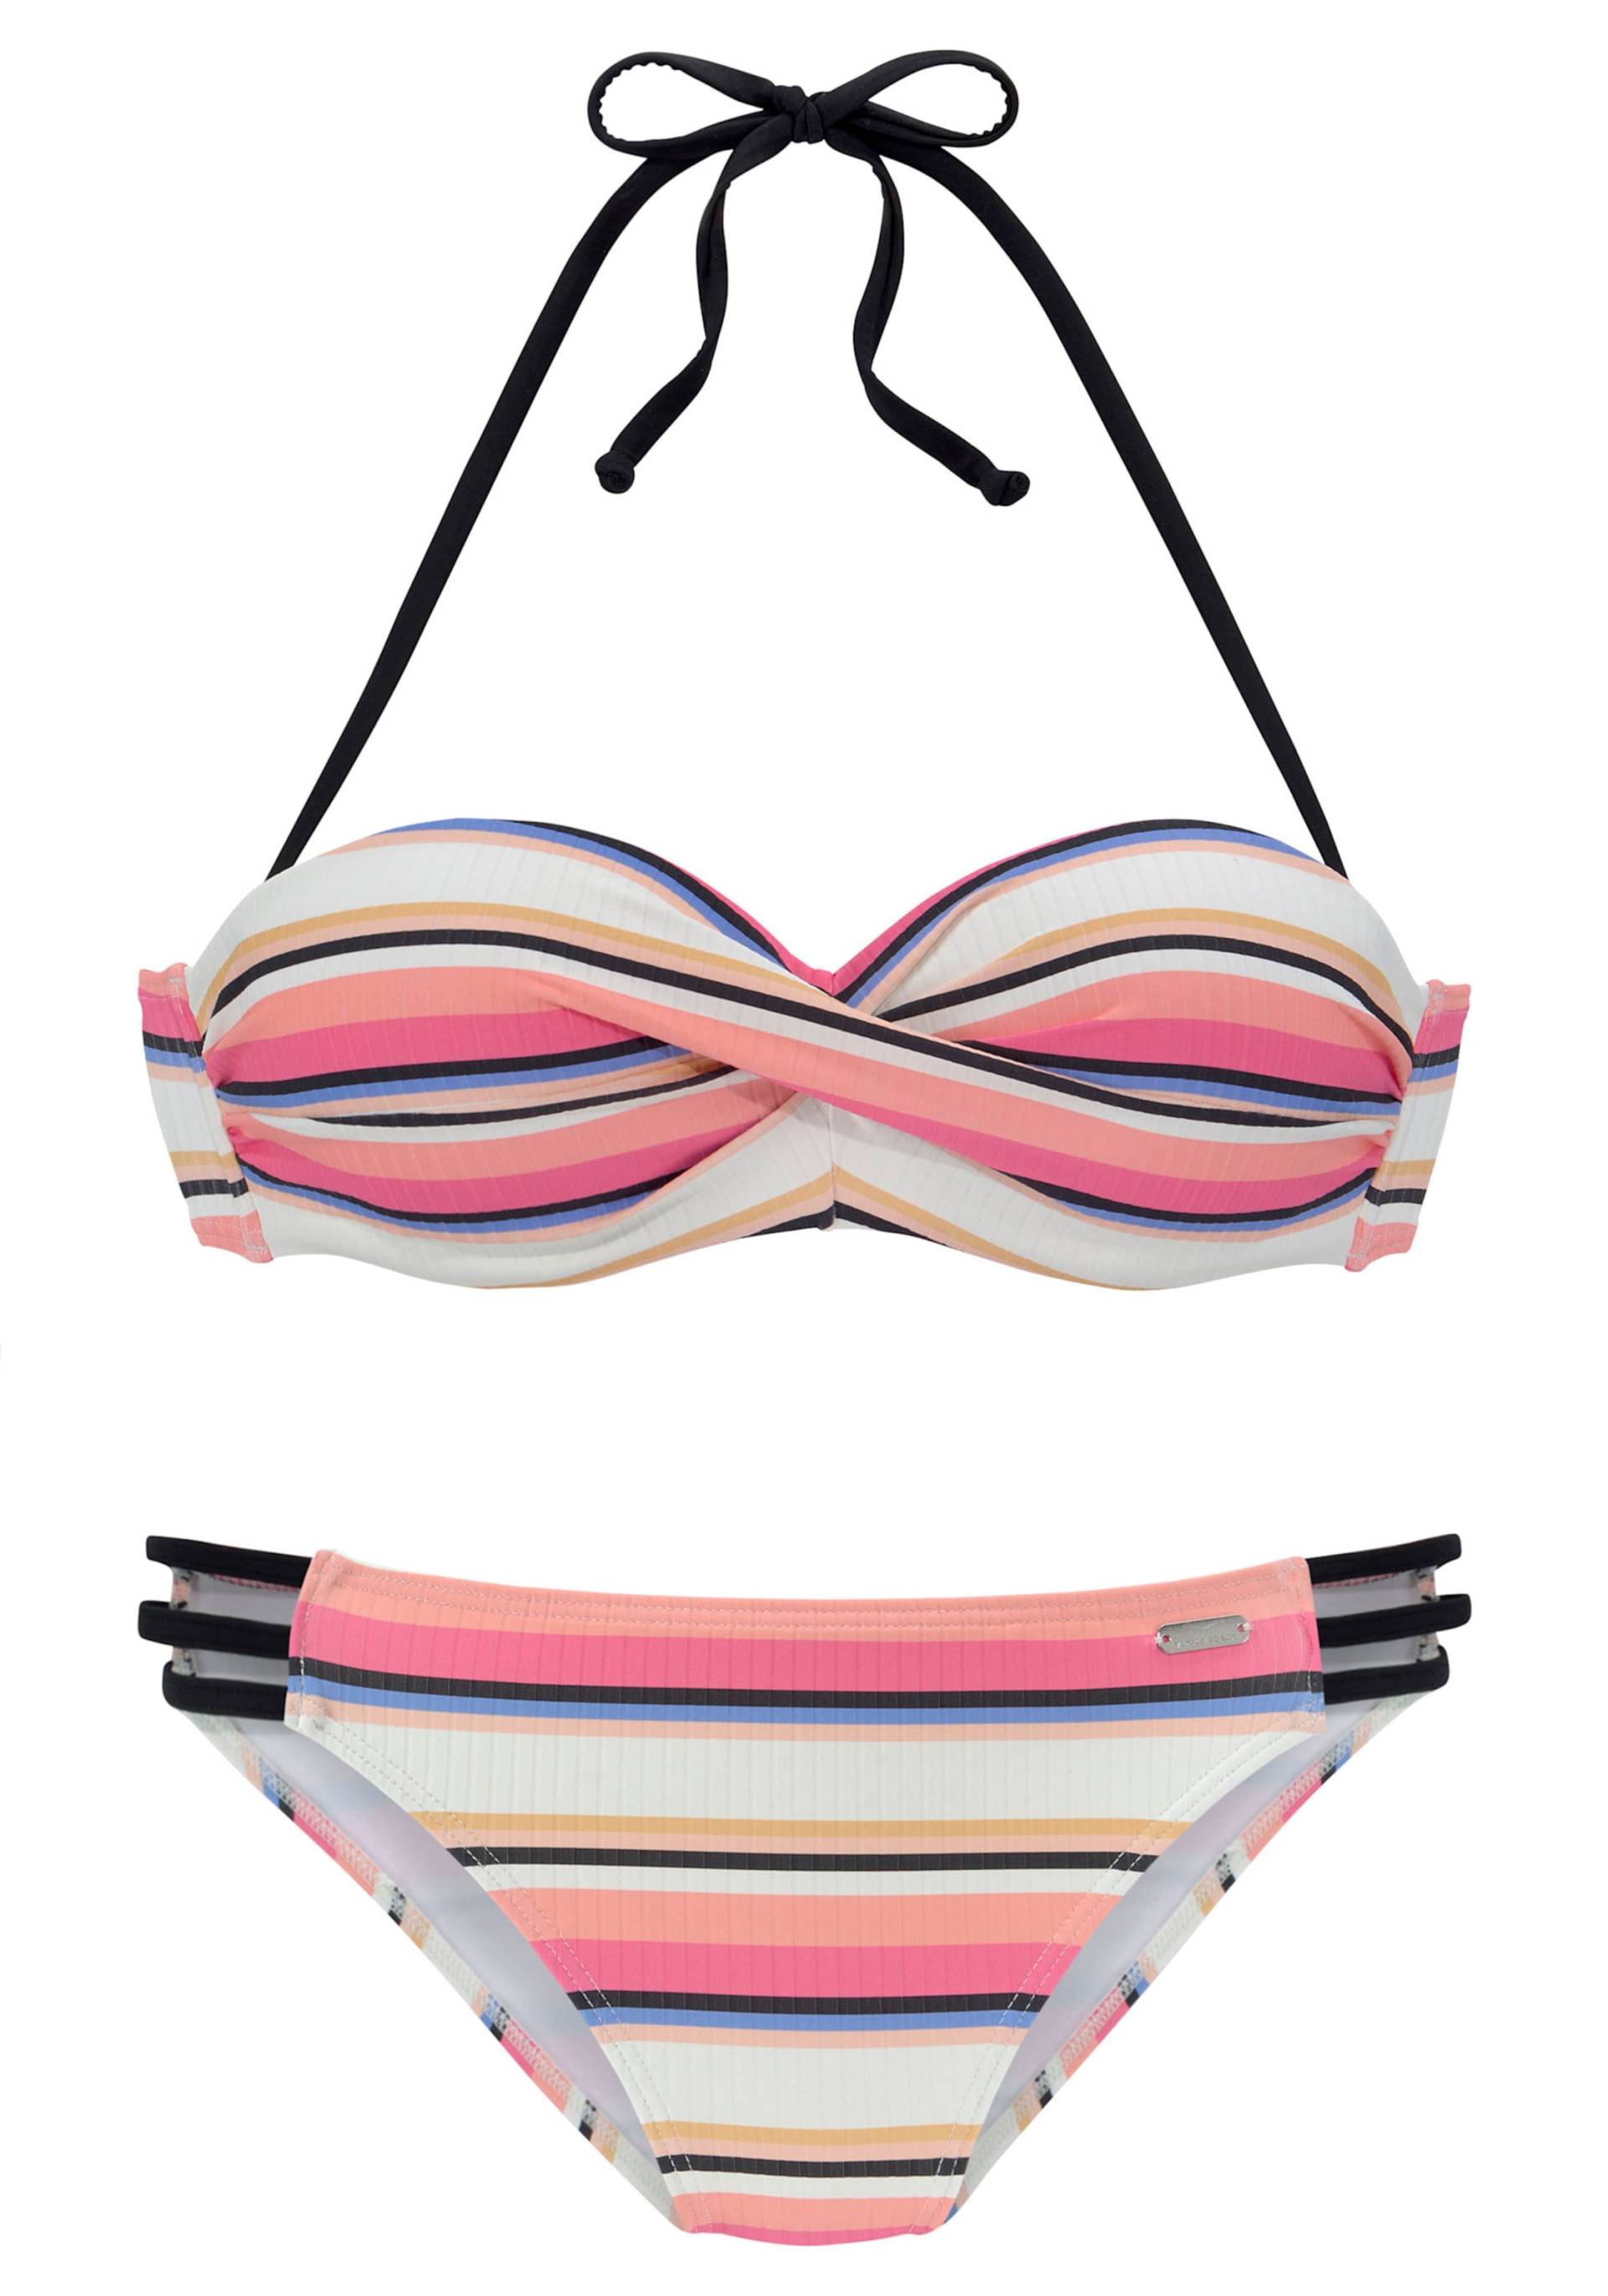 Bügel-Bandeau-Bikini in creme-rosa von Venice Beach